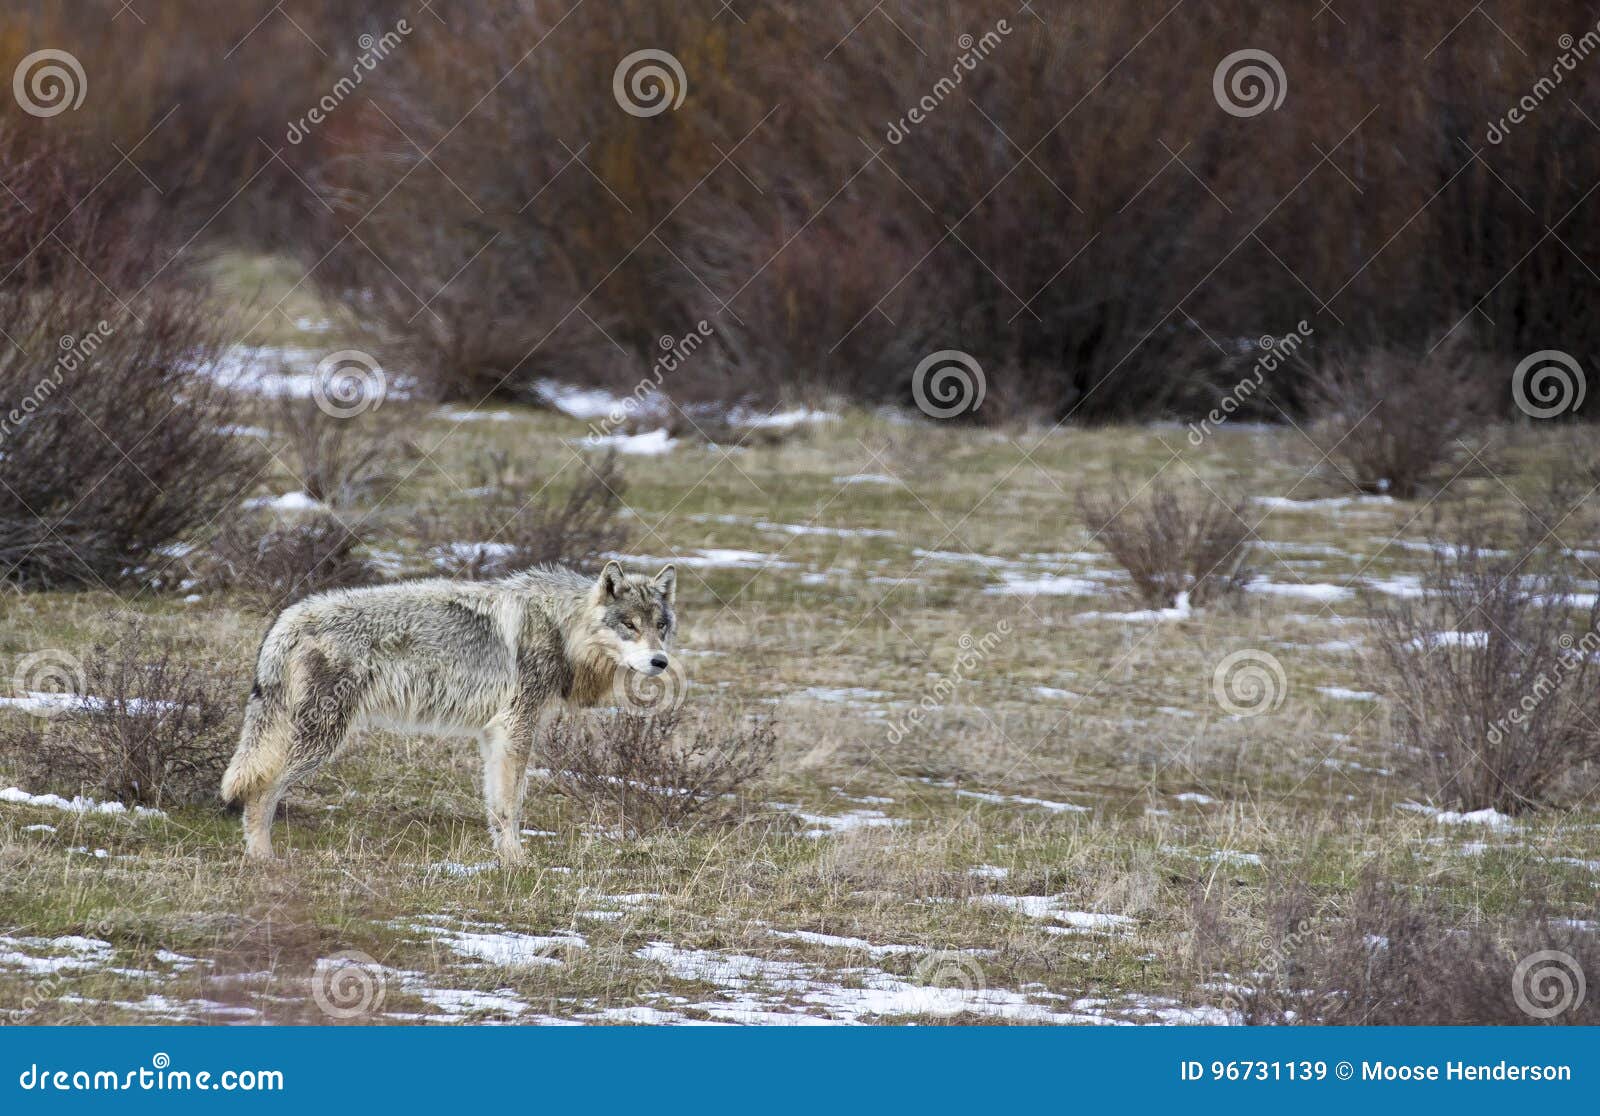 grey wolf standing in grass with sagebrush